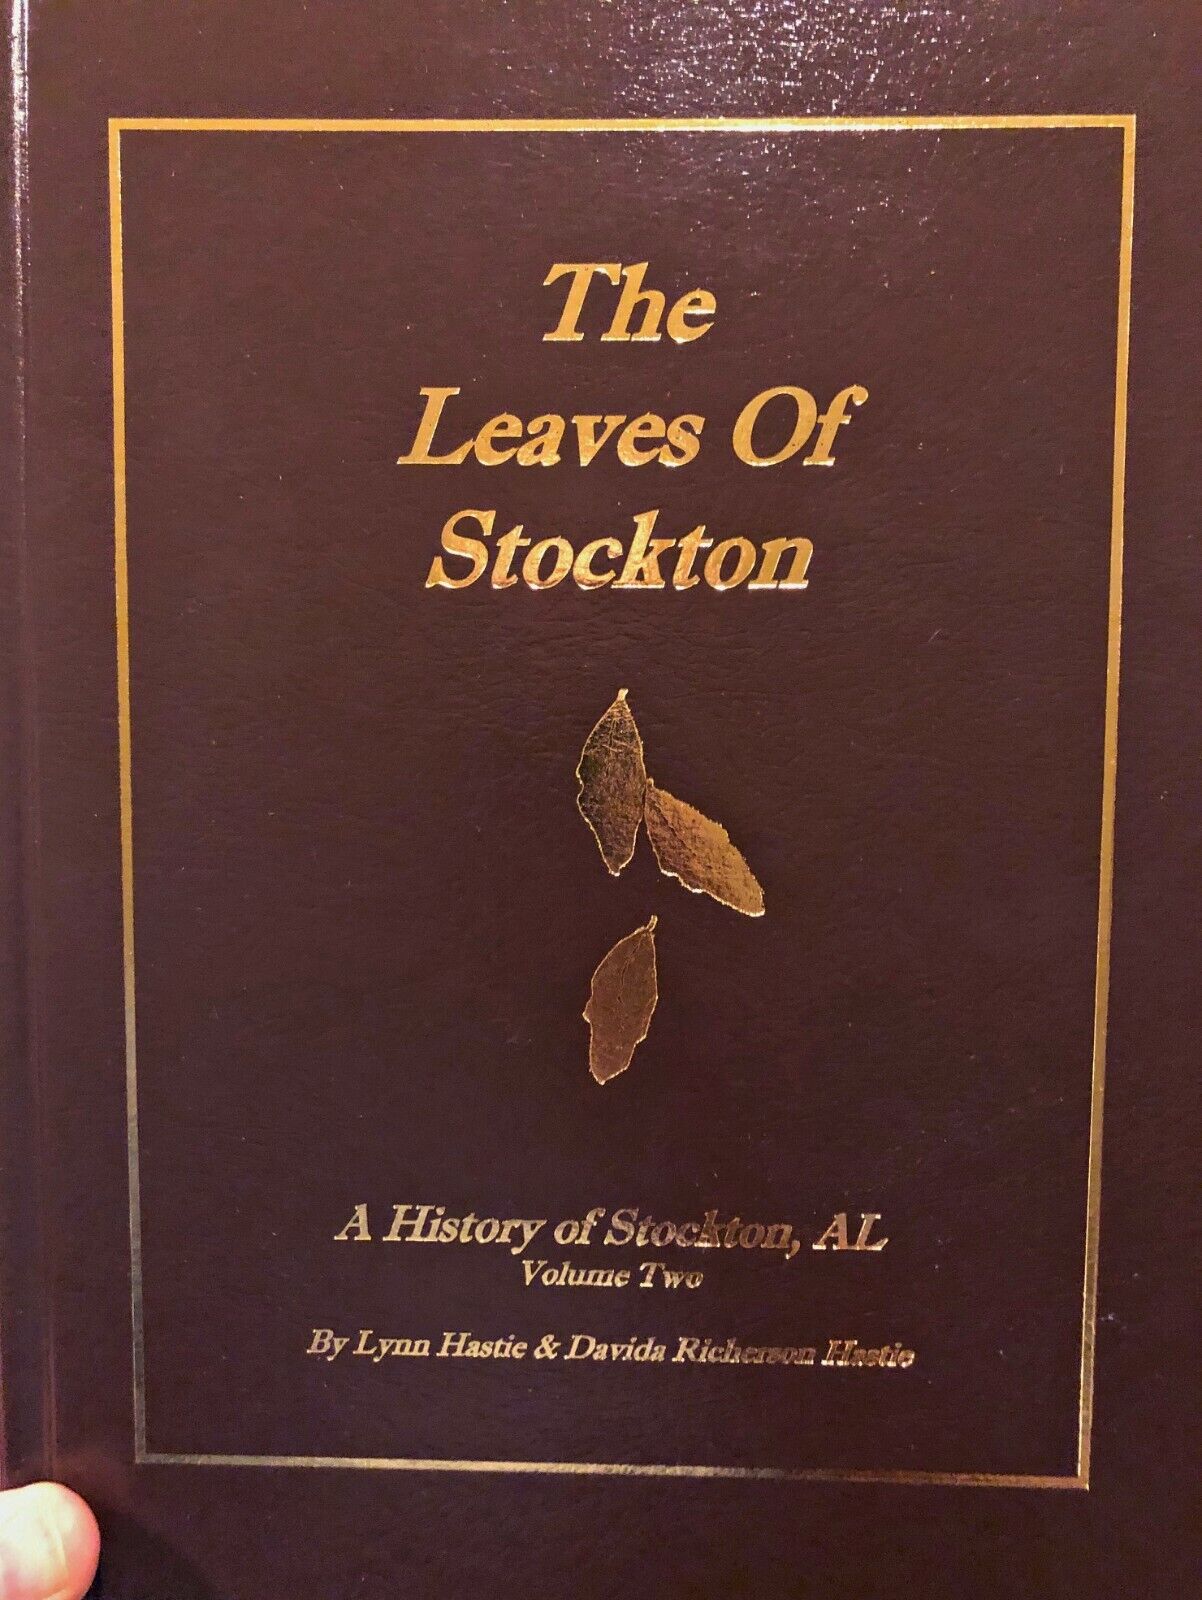 STOCKTON, ALABAMA HISTORY (Baldwin County): The Leaves of Stockton, Vol 2